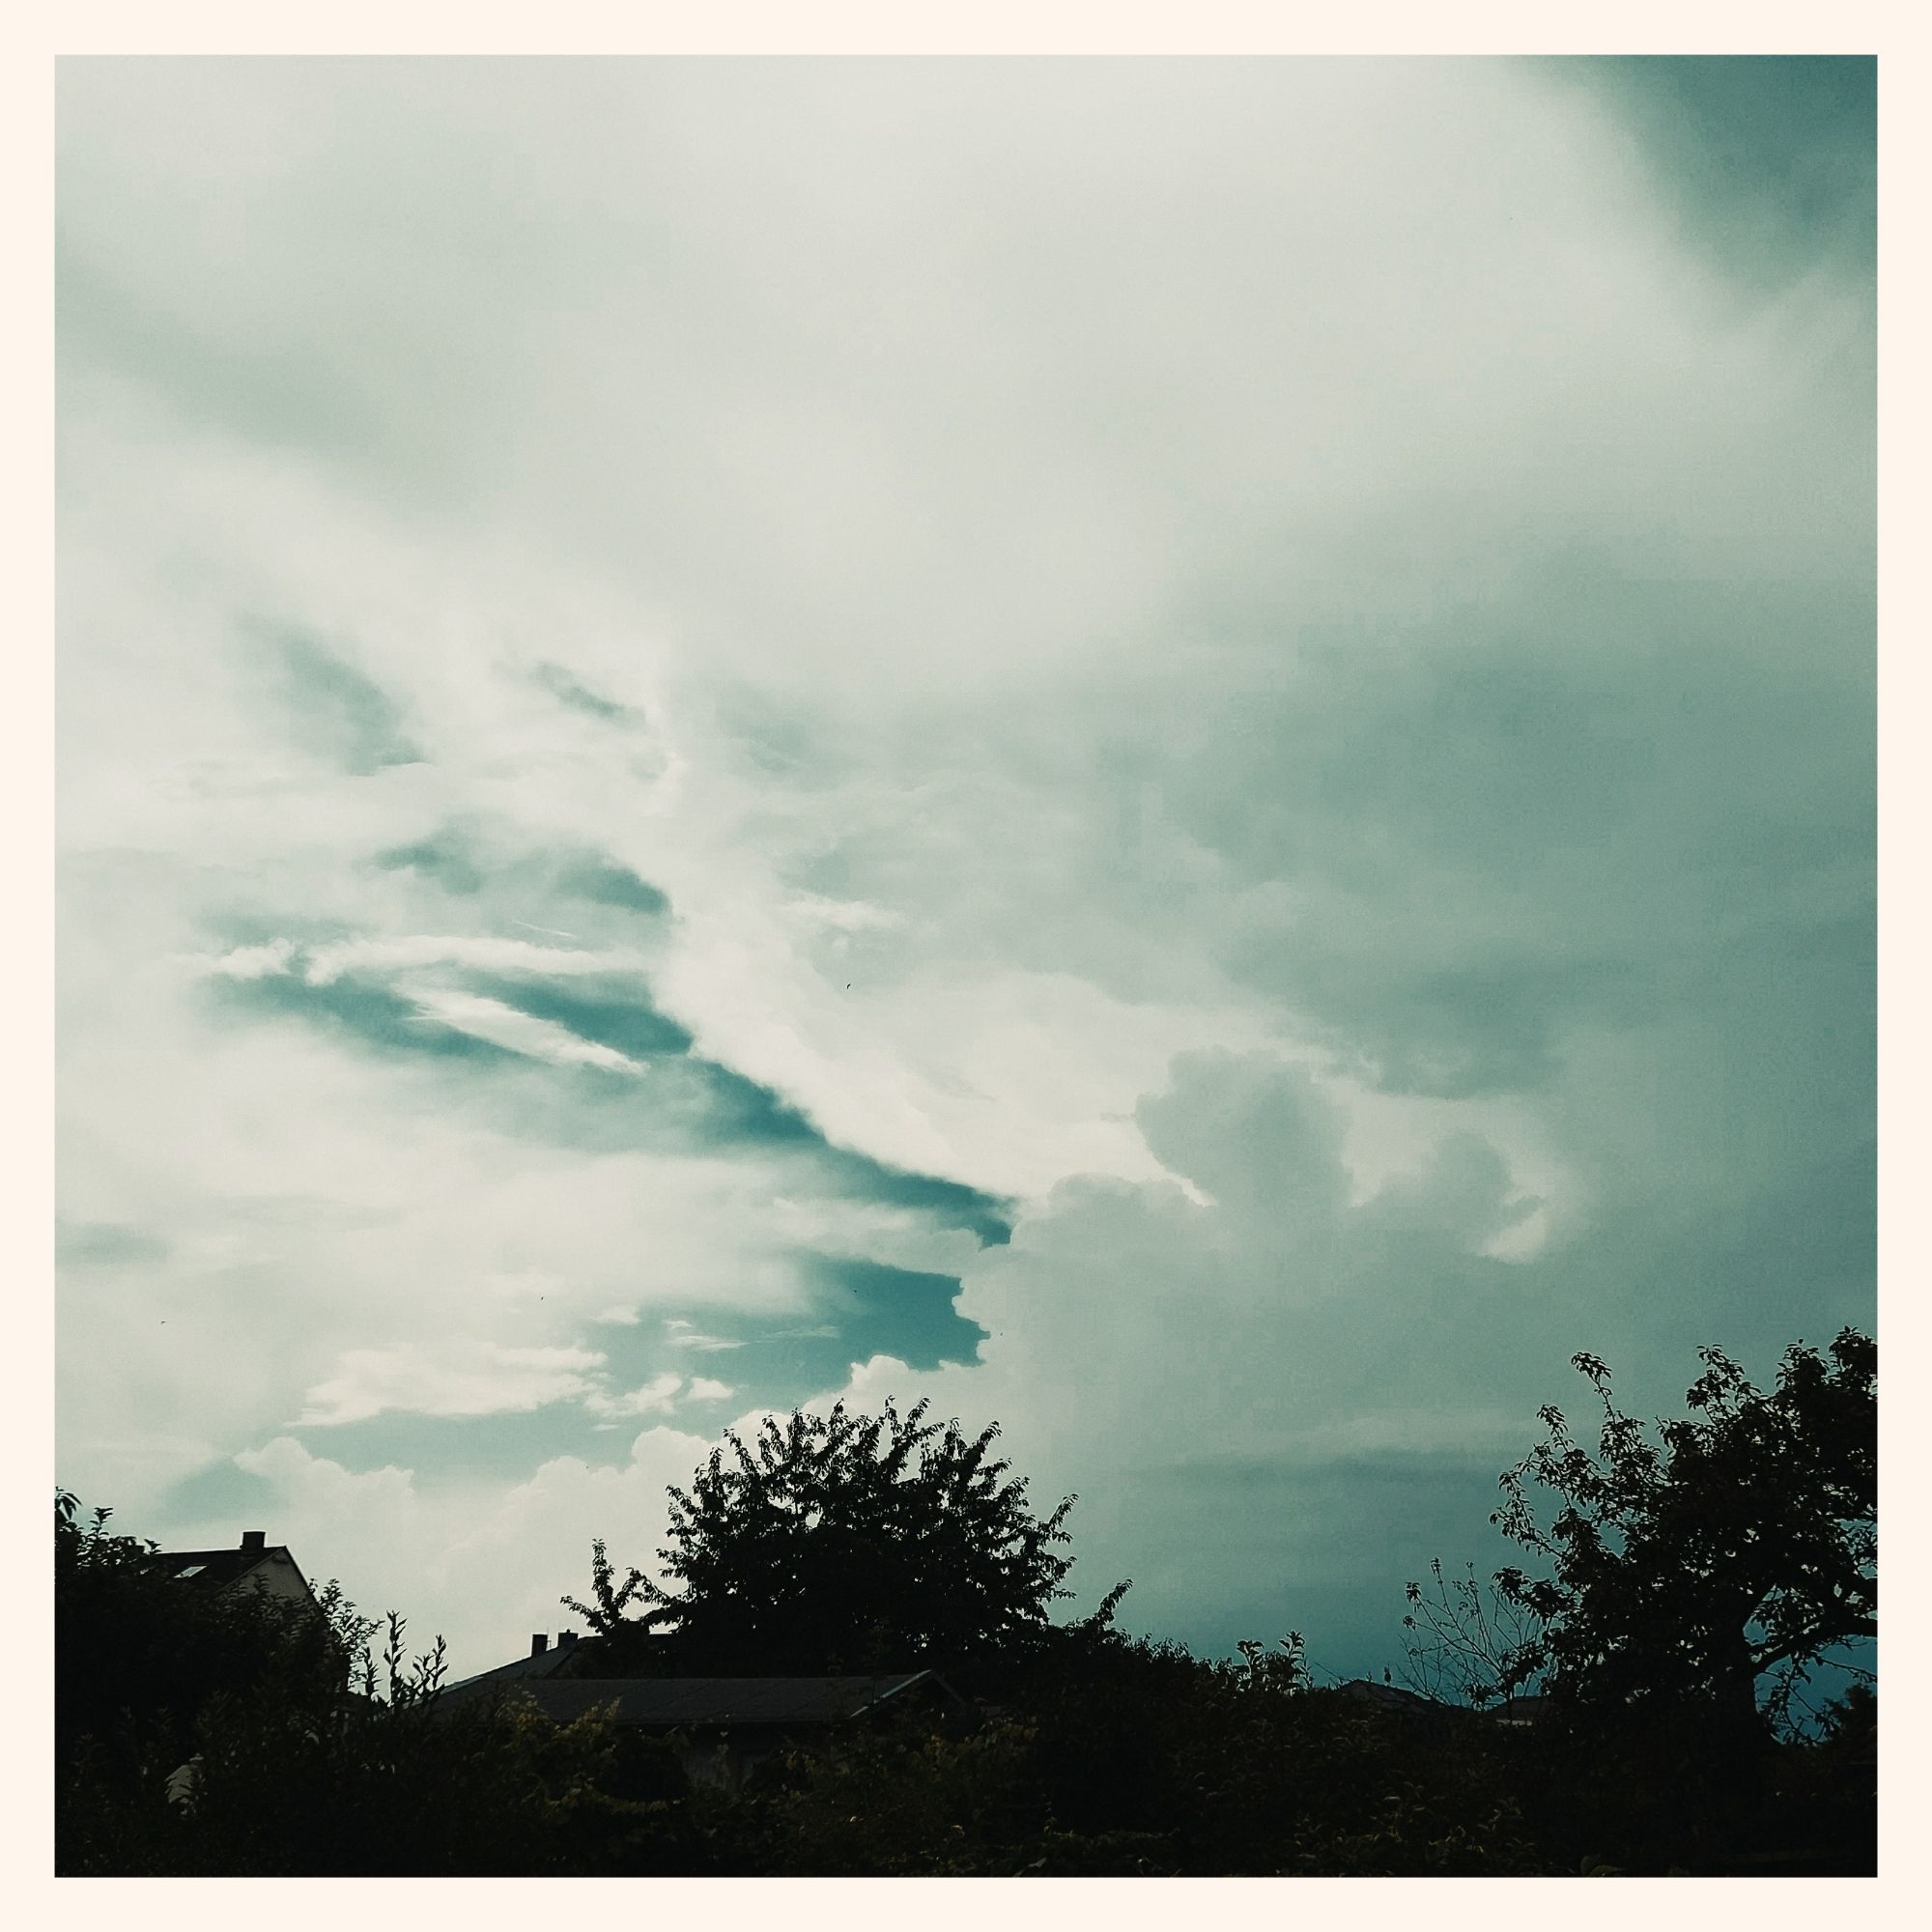 Temporary storm clouds, lomo-coloured. A treeline below.